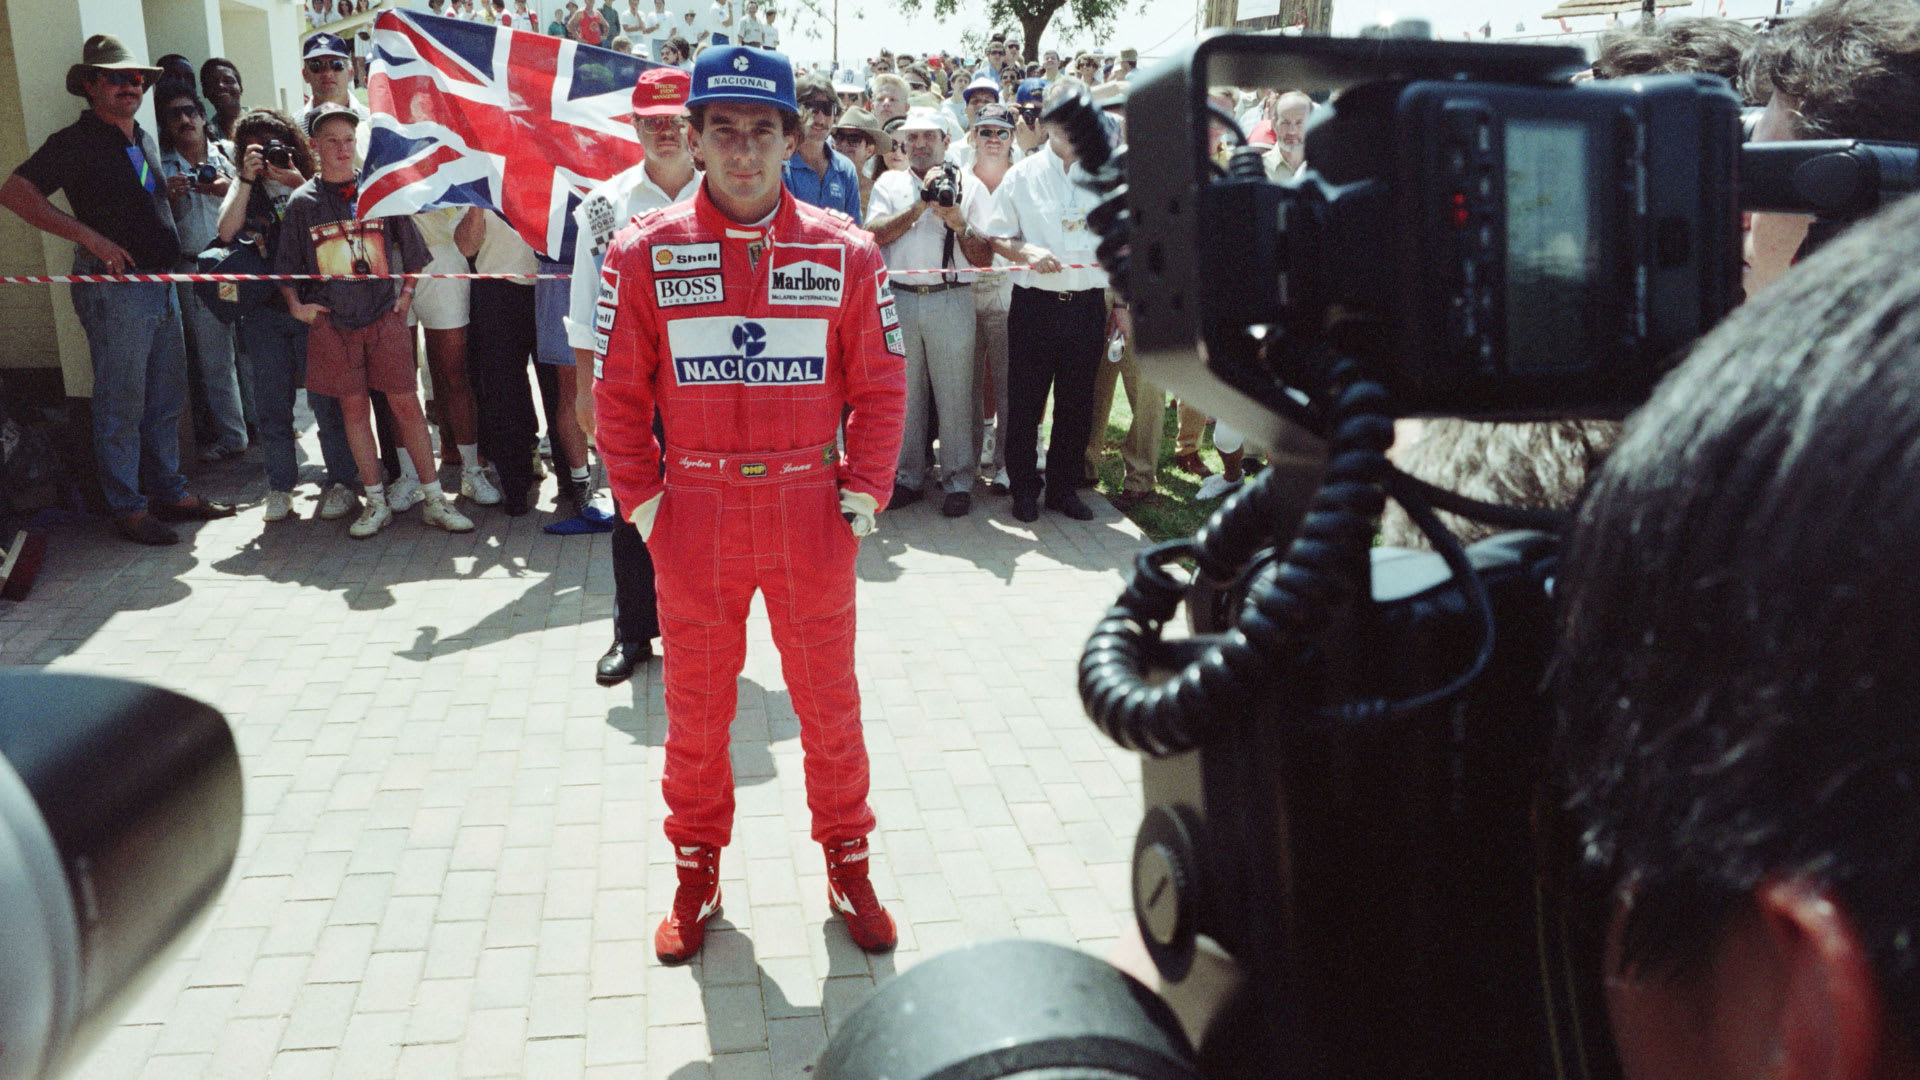 Senna, Stirling, Schumacher and more